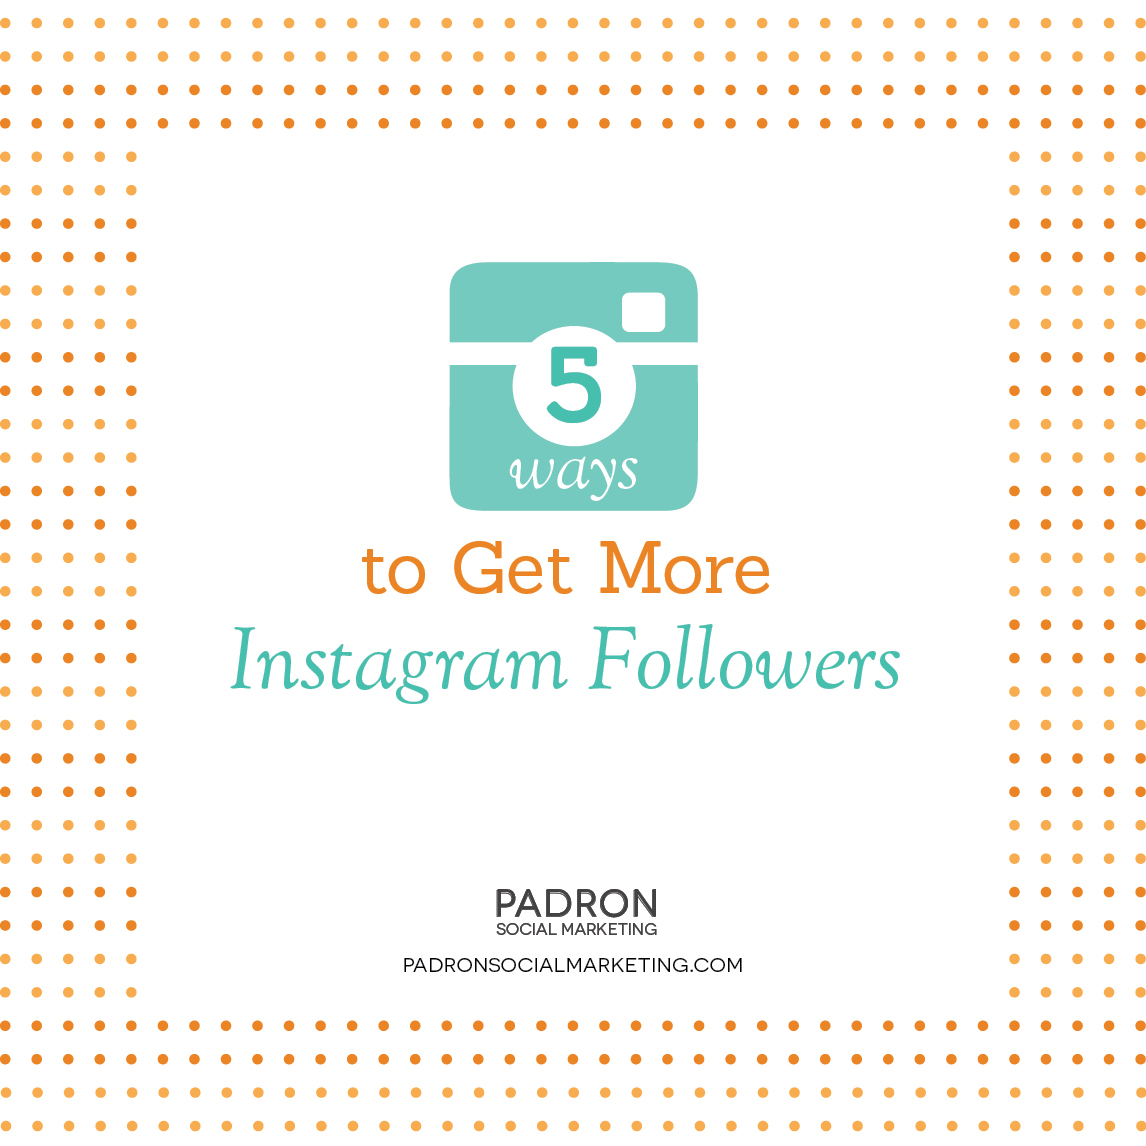 Get More Instagram Followers